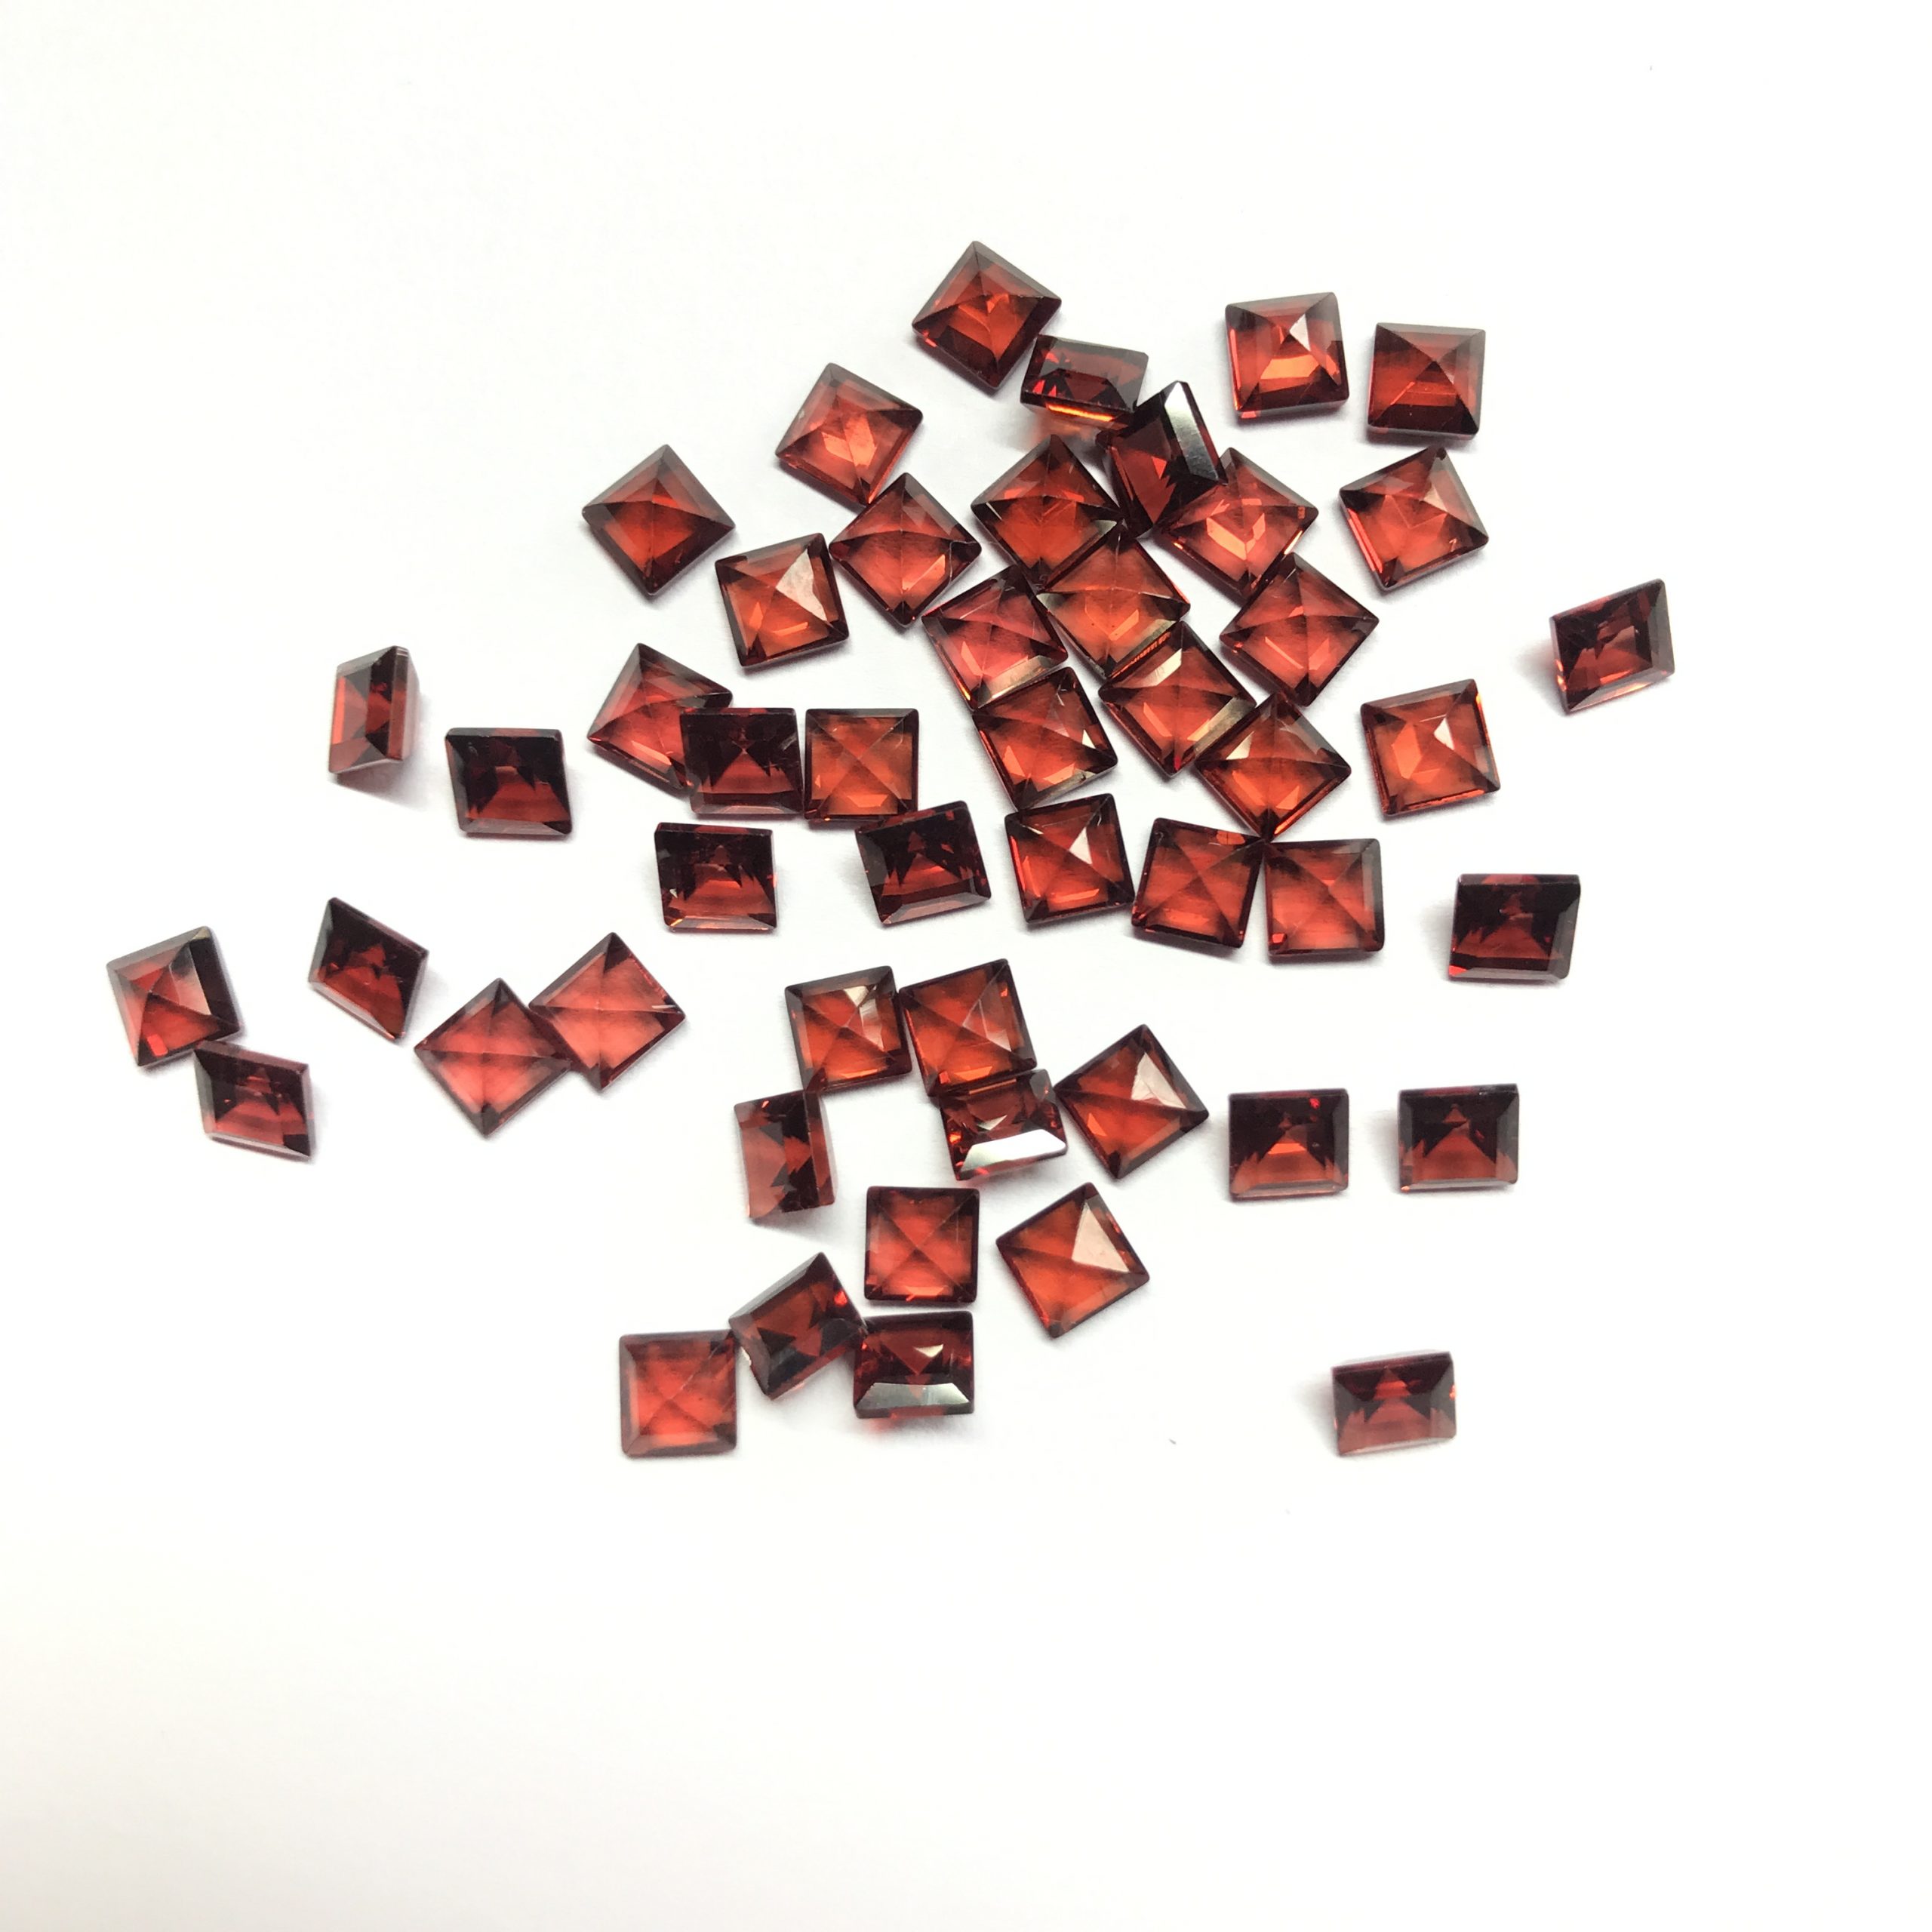 4mm Natural Red Garnet Square Faceted Gemstone